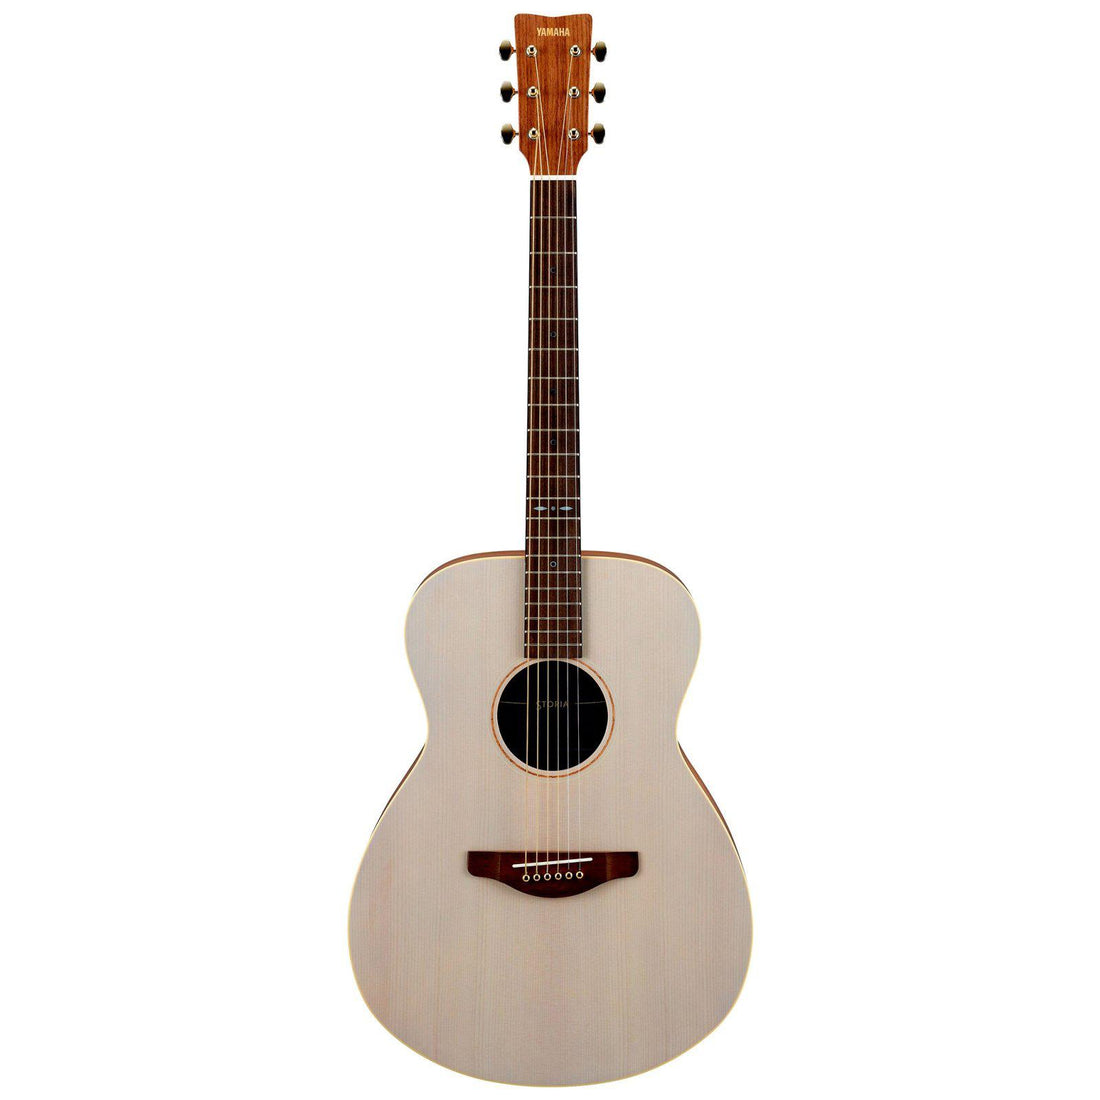 Yamaha Storia Acoustic Guitars